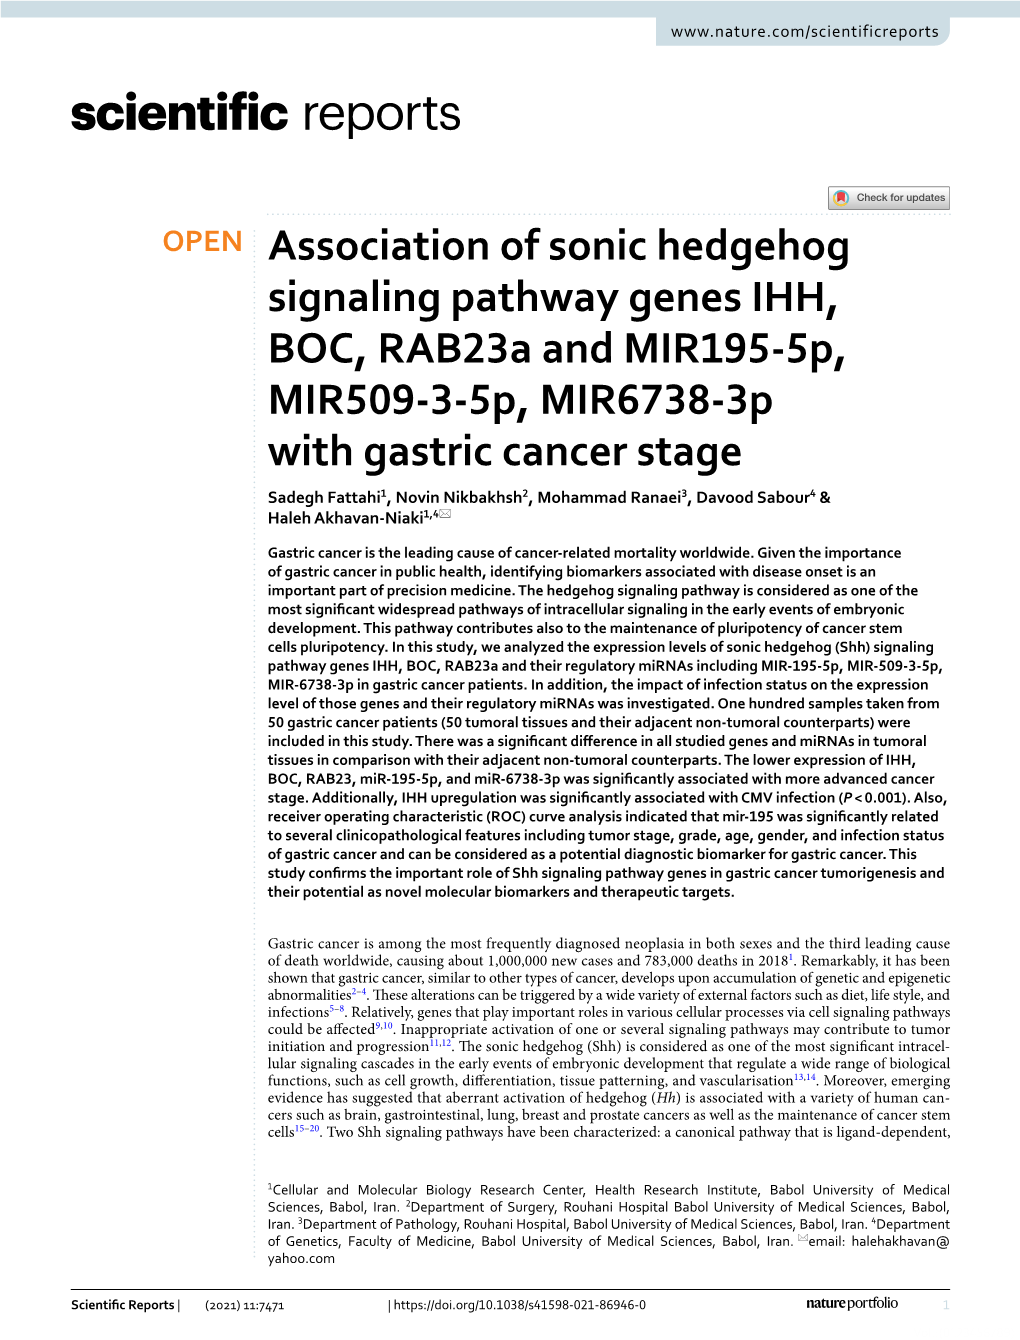 Association of Sonic Hedgehog Signaling Pathway Genes IHH, BOC